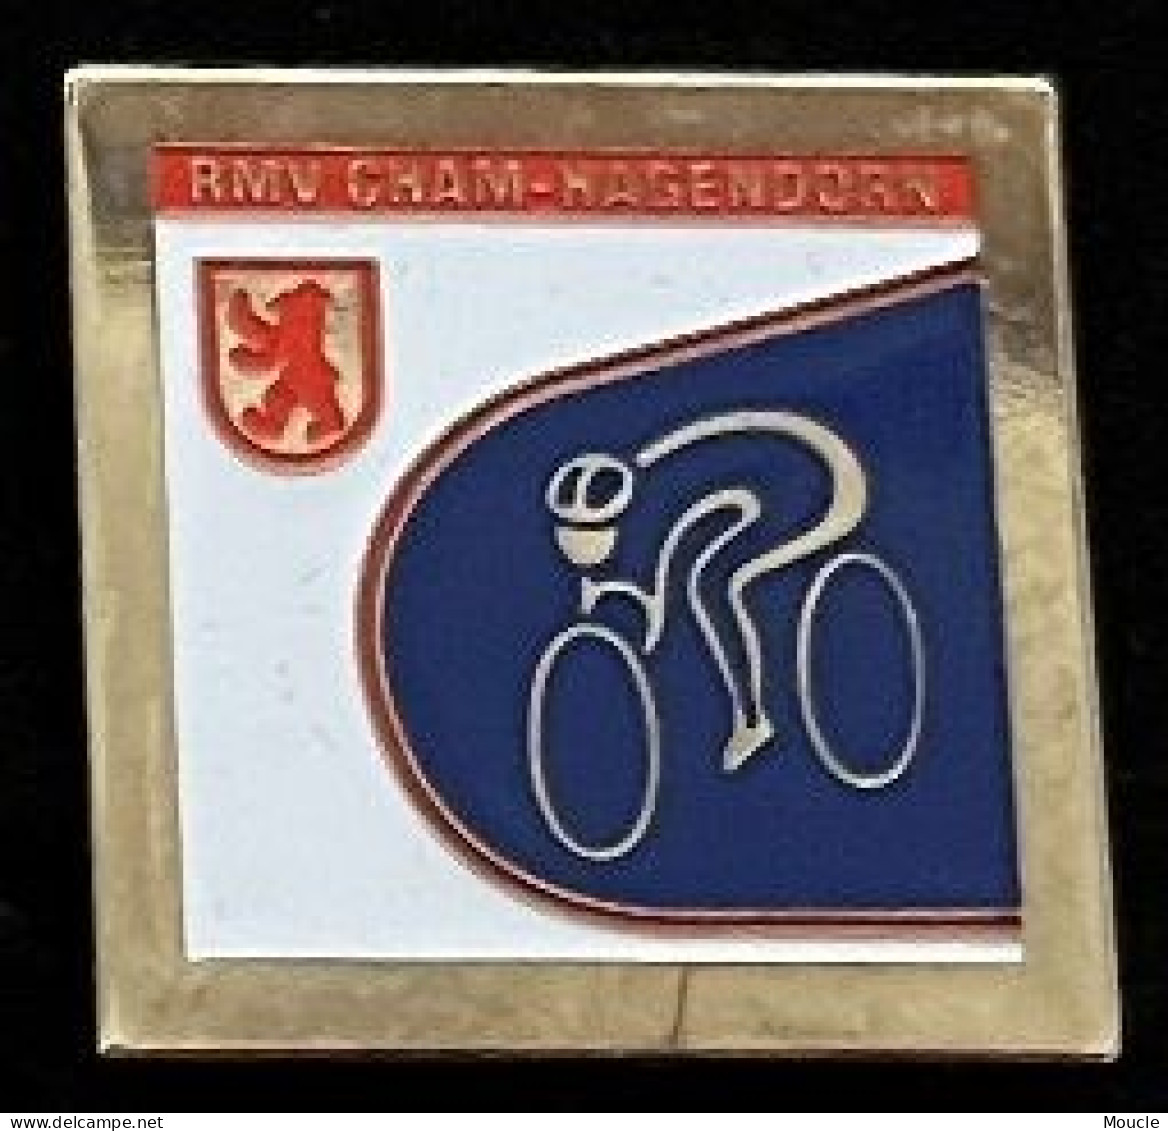 CYCLISME - VELO - BIKE - CYCLISTE - CYCLES - RMV - VELO CLUB - CHAM - HAGENDORN - SUISSE - SCHWEIZ - SWITZERLAND -  (33) - Cyclisme